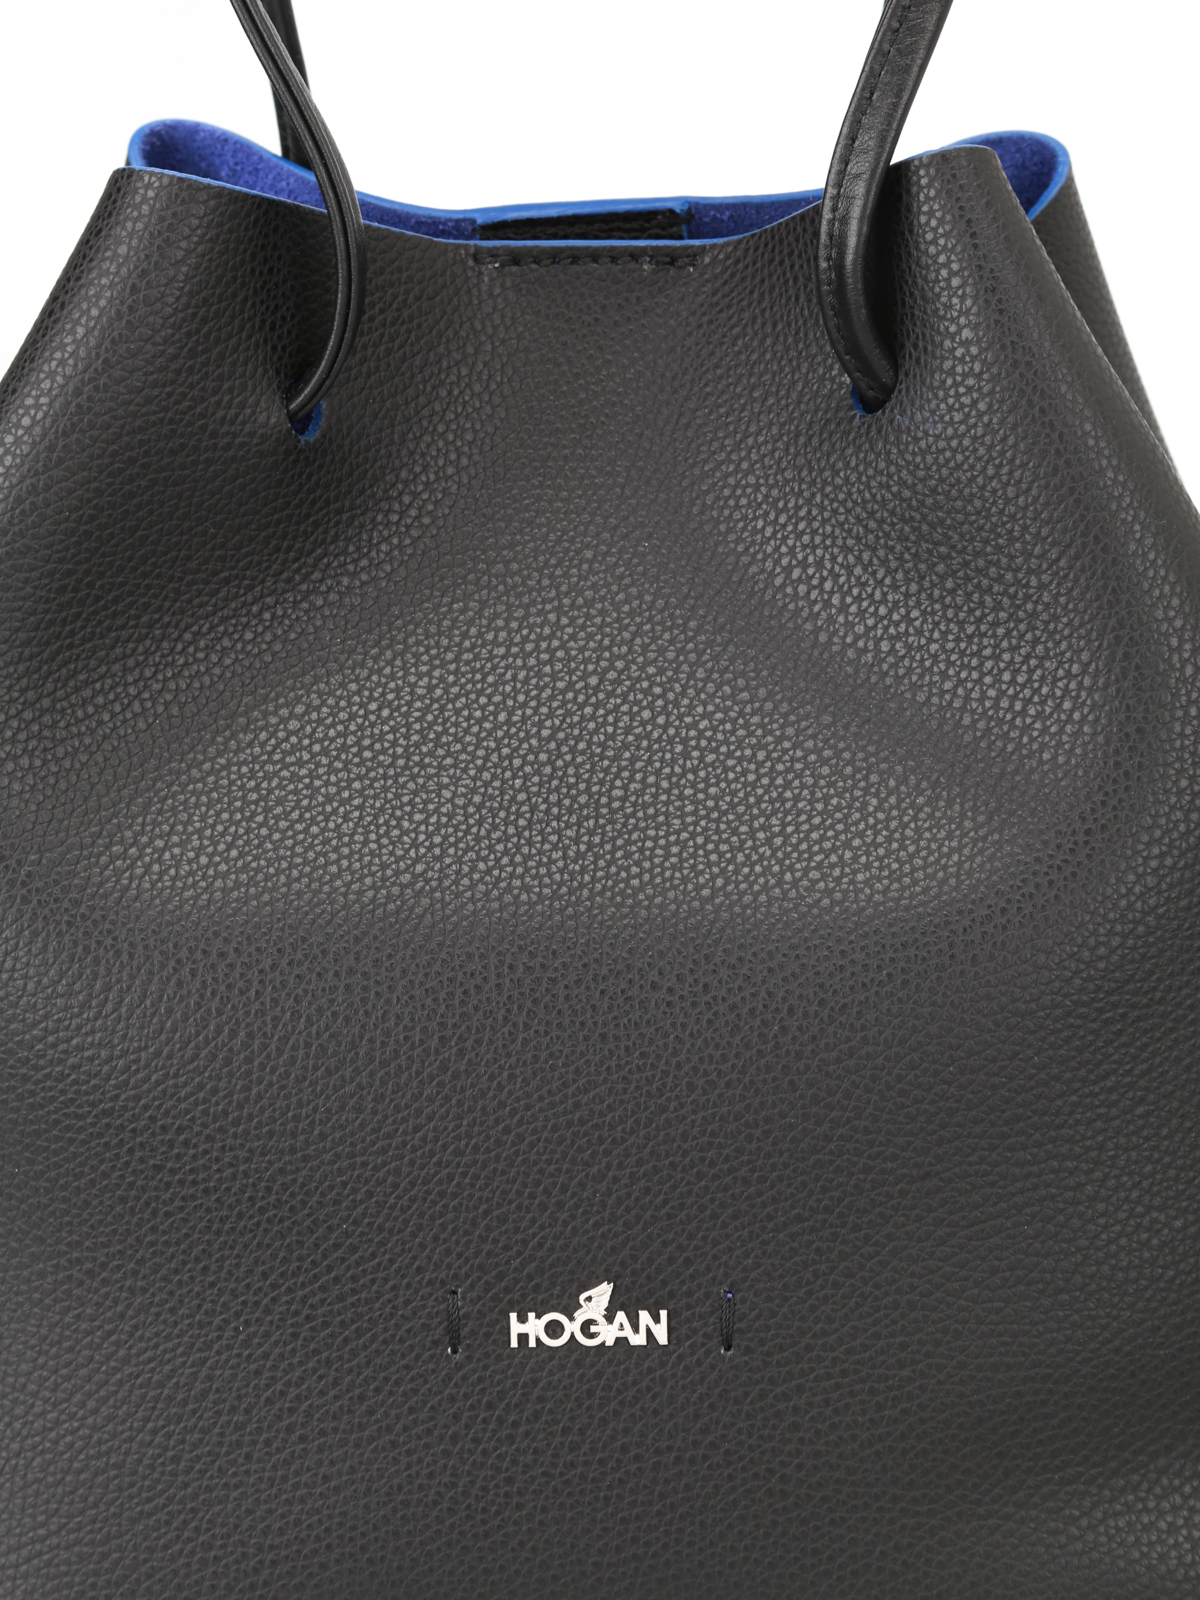 span Gemengd Gewoon Bucket bags Hogan - Grainy black leather bucket bag - KBW00WK0300HVD187Z